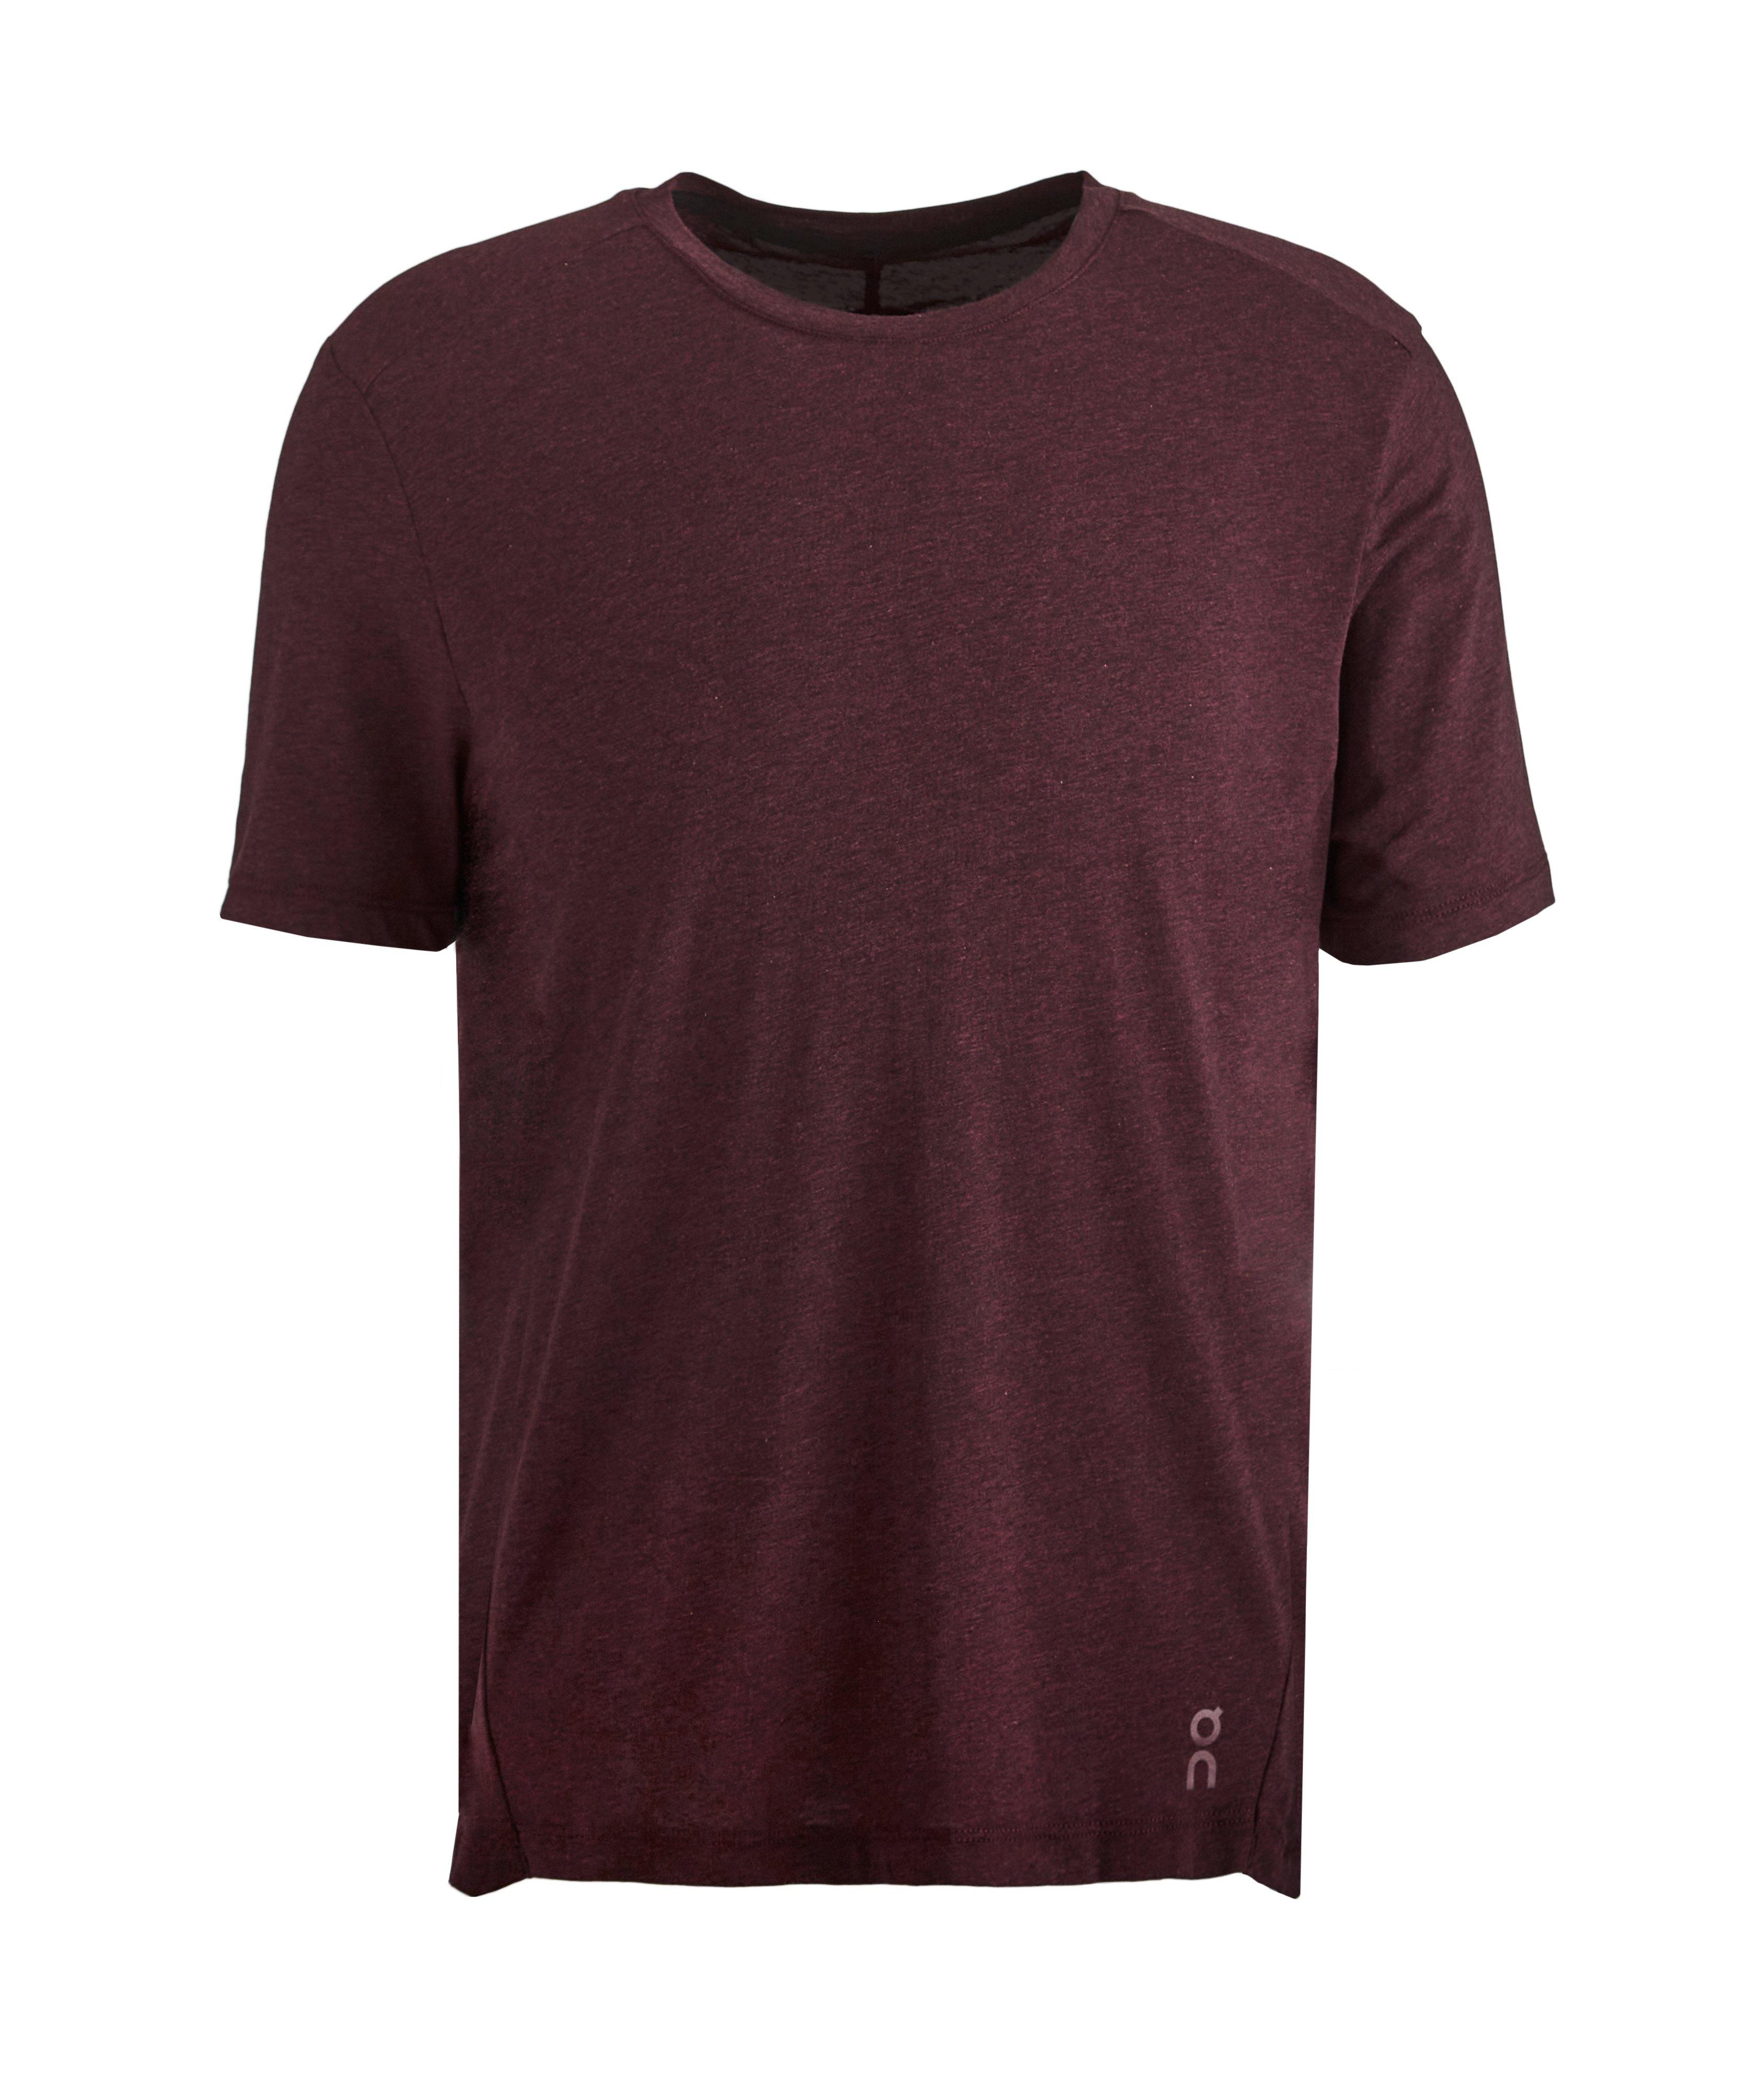 Performance Stretch-Cotton Blend T-Shirt image 0